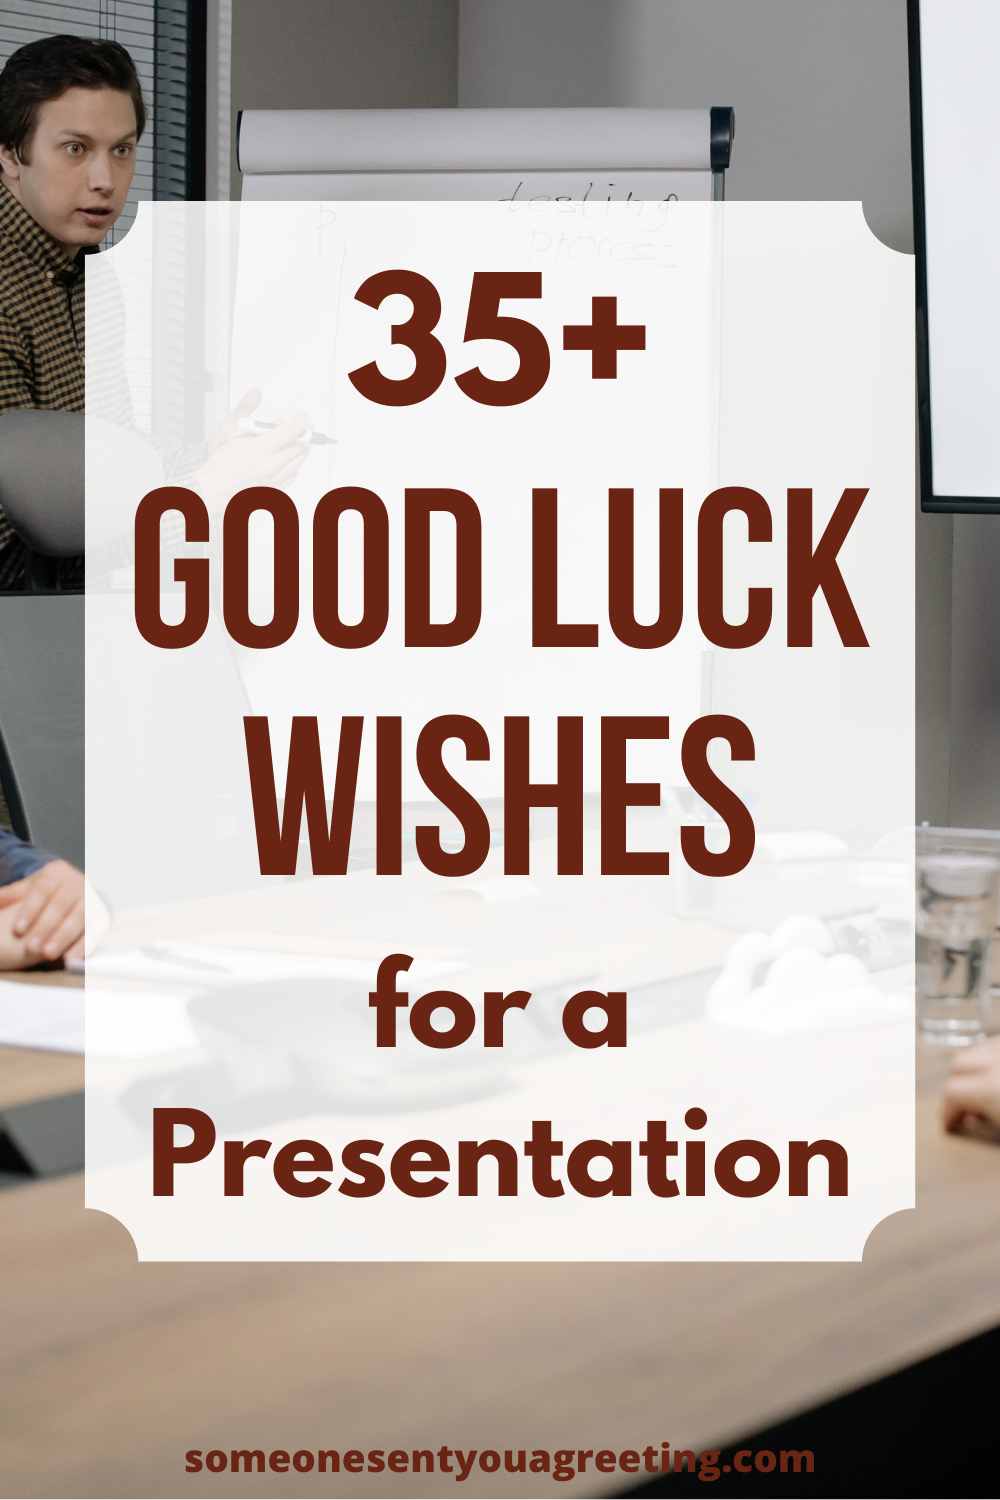 good luck on your presentation tomorrow